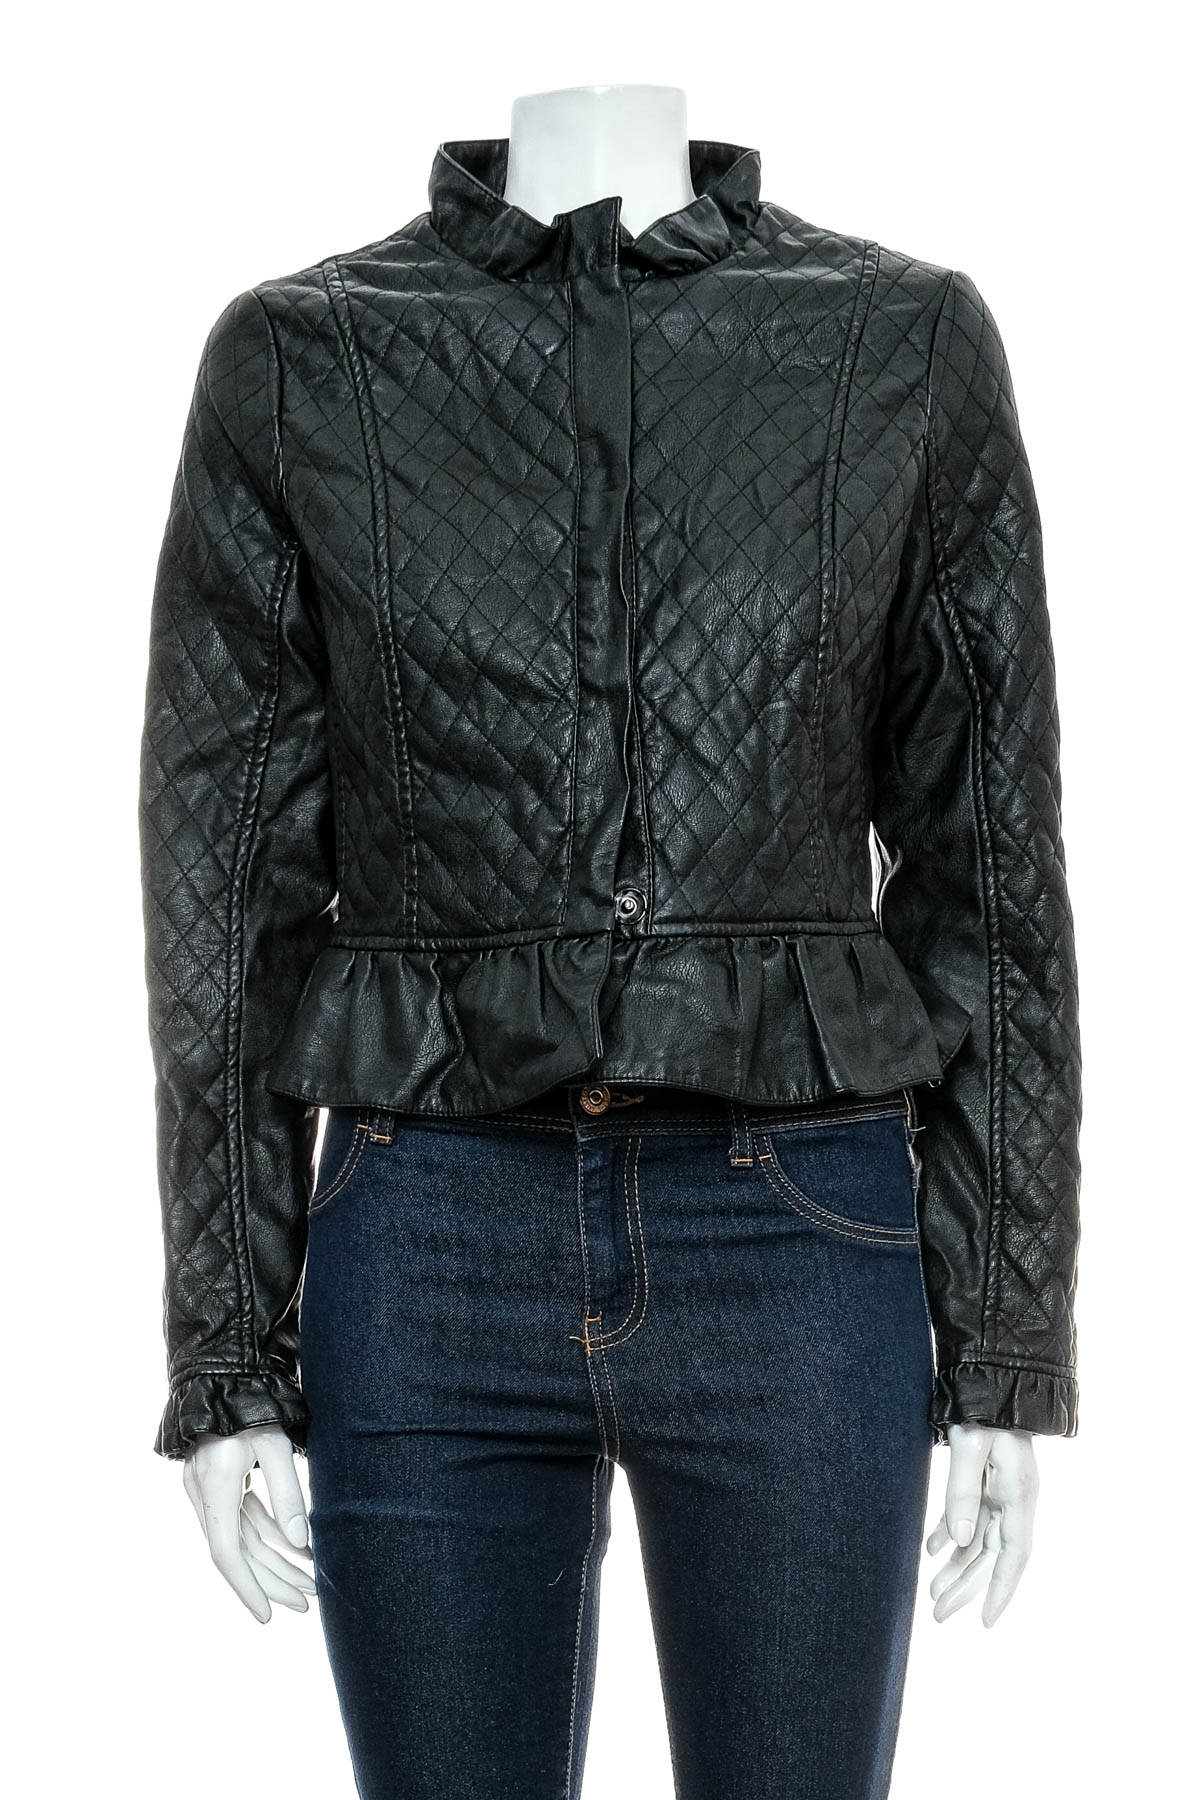 Women's leather jacket - Nuna Lie - 0